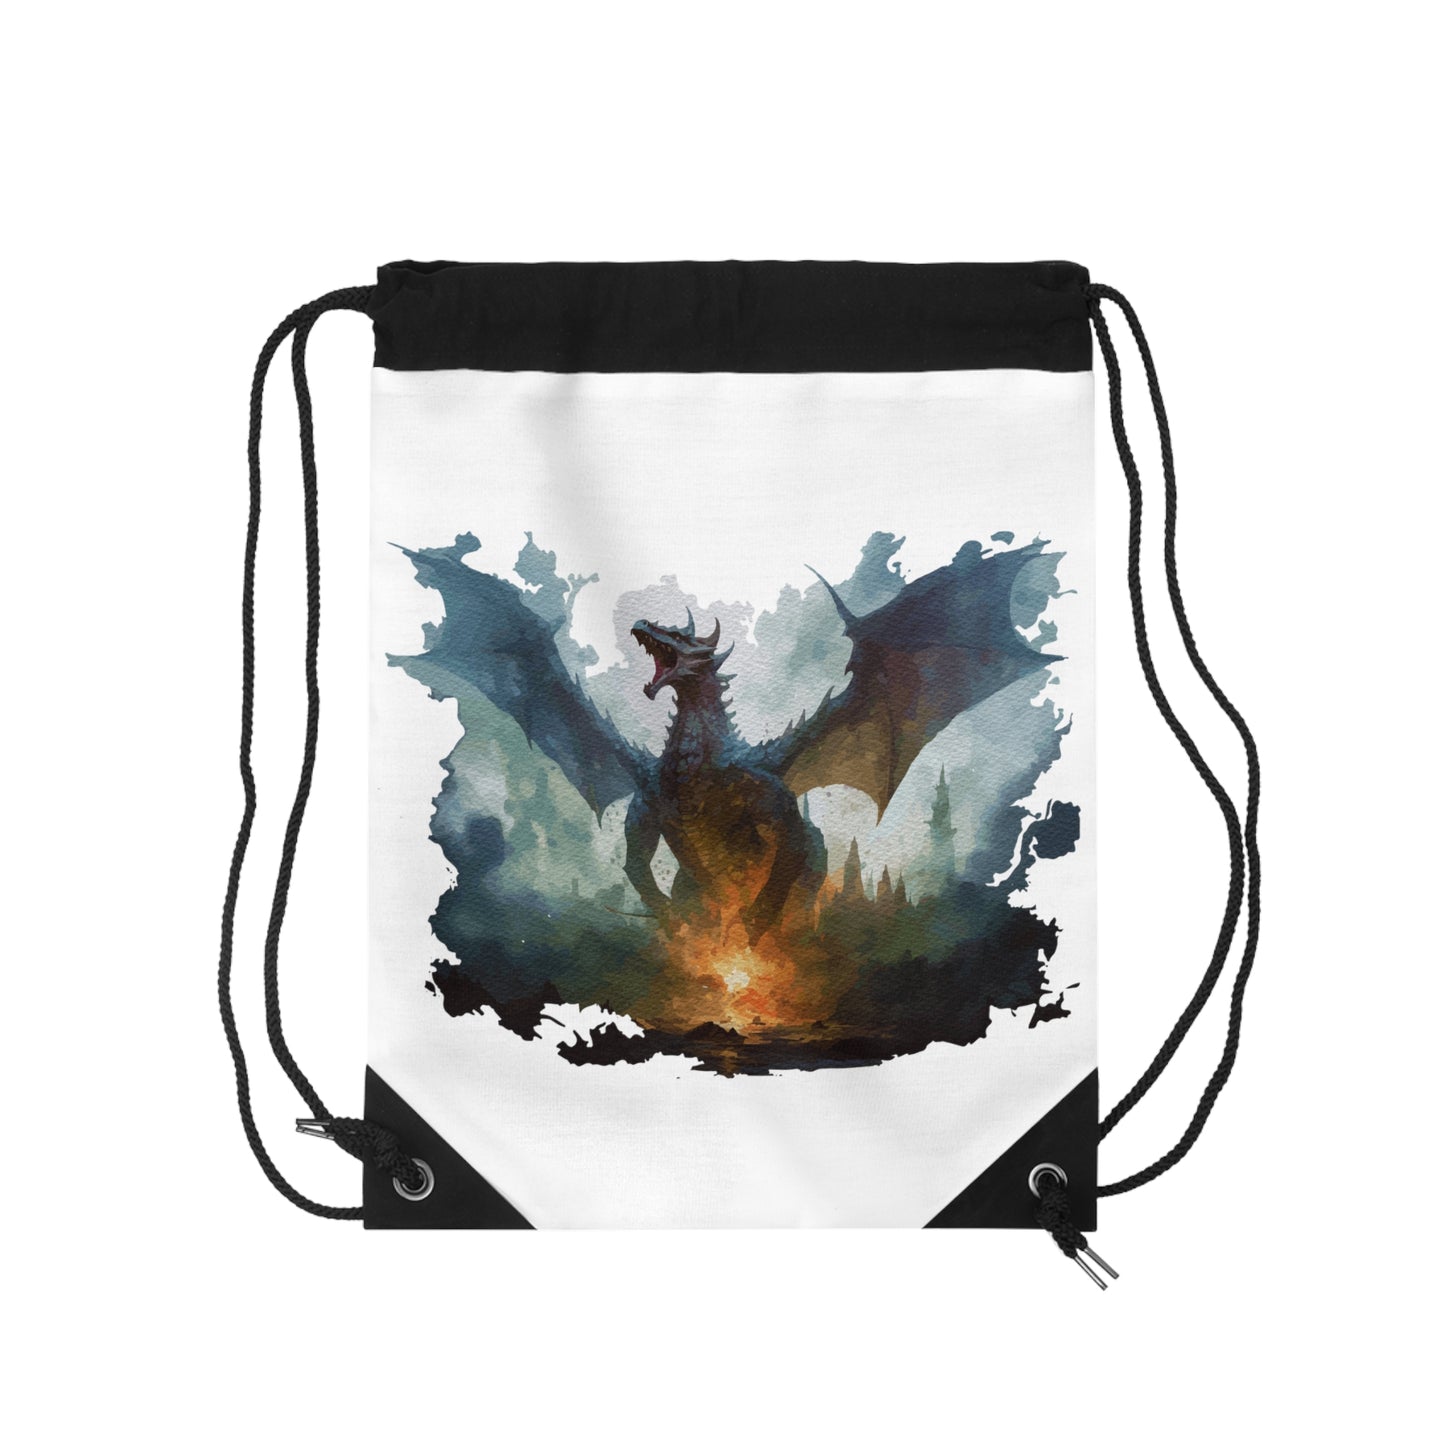 Drawstring Bag - Roaring Dragon Drawstring Bag, Zipper Pocket Inside